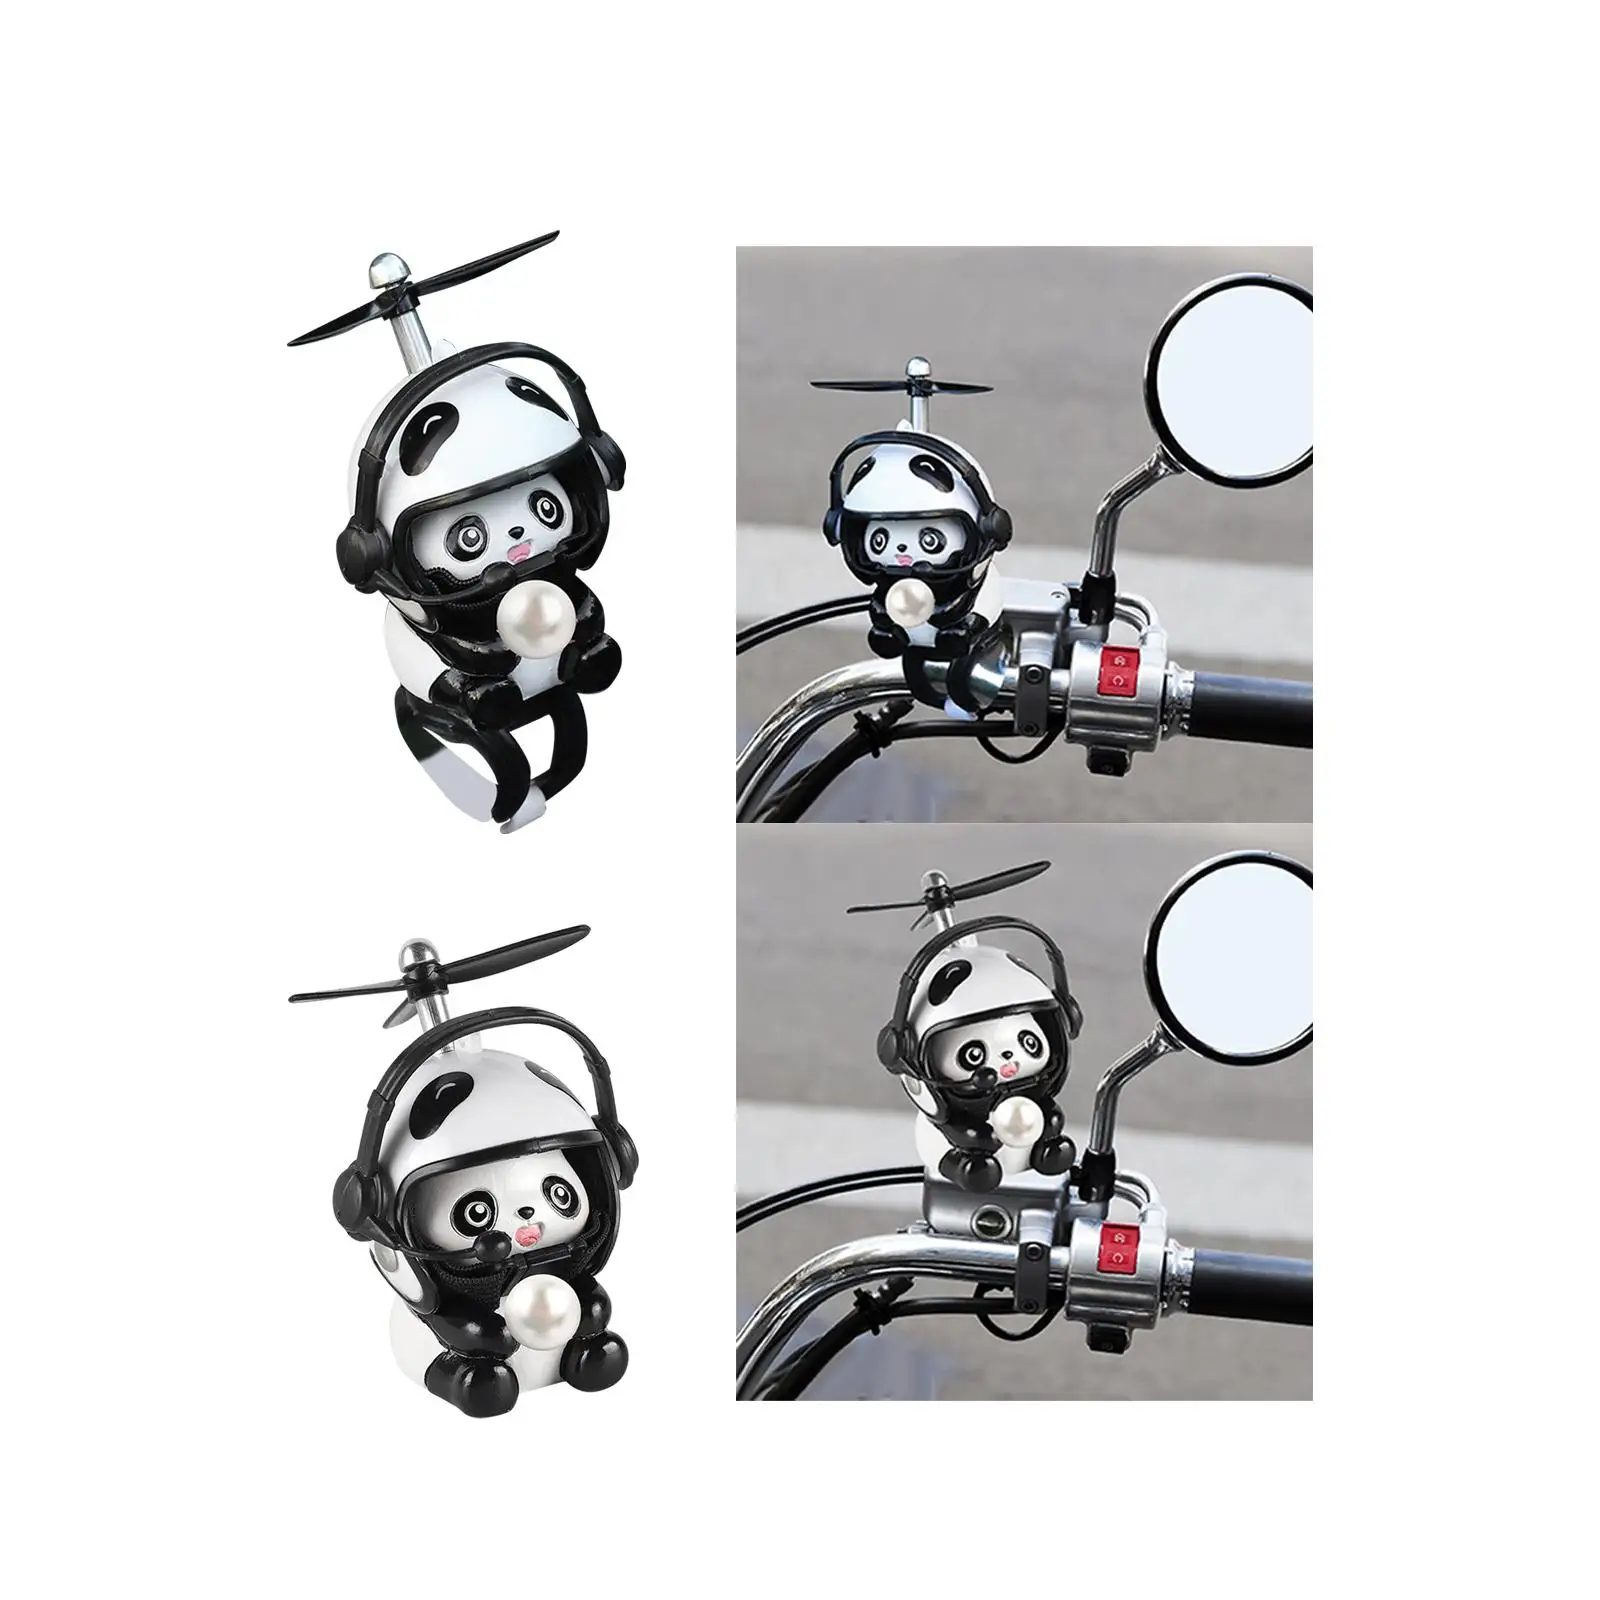 Bike Handlebars Mount Doll with Propeller Bike Handlebar Accessories Motorcycle Handlebar Ornament for Electric Vehicles